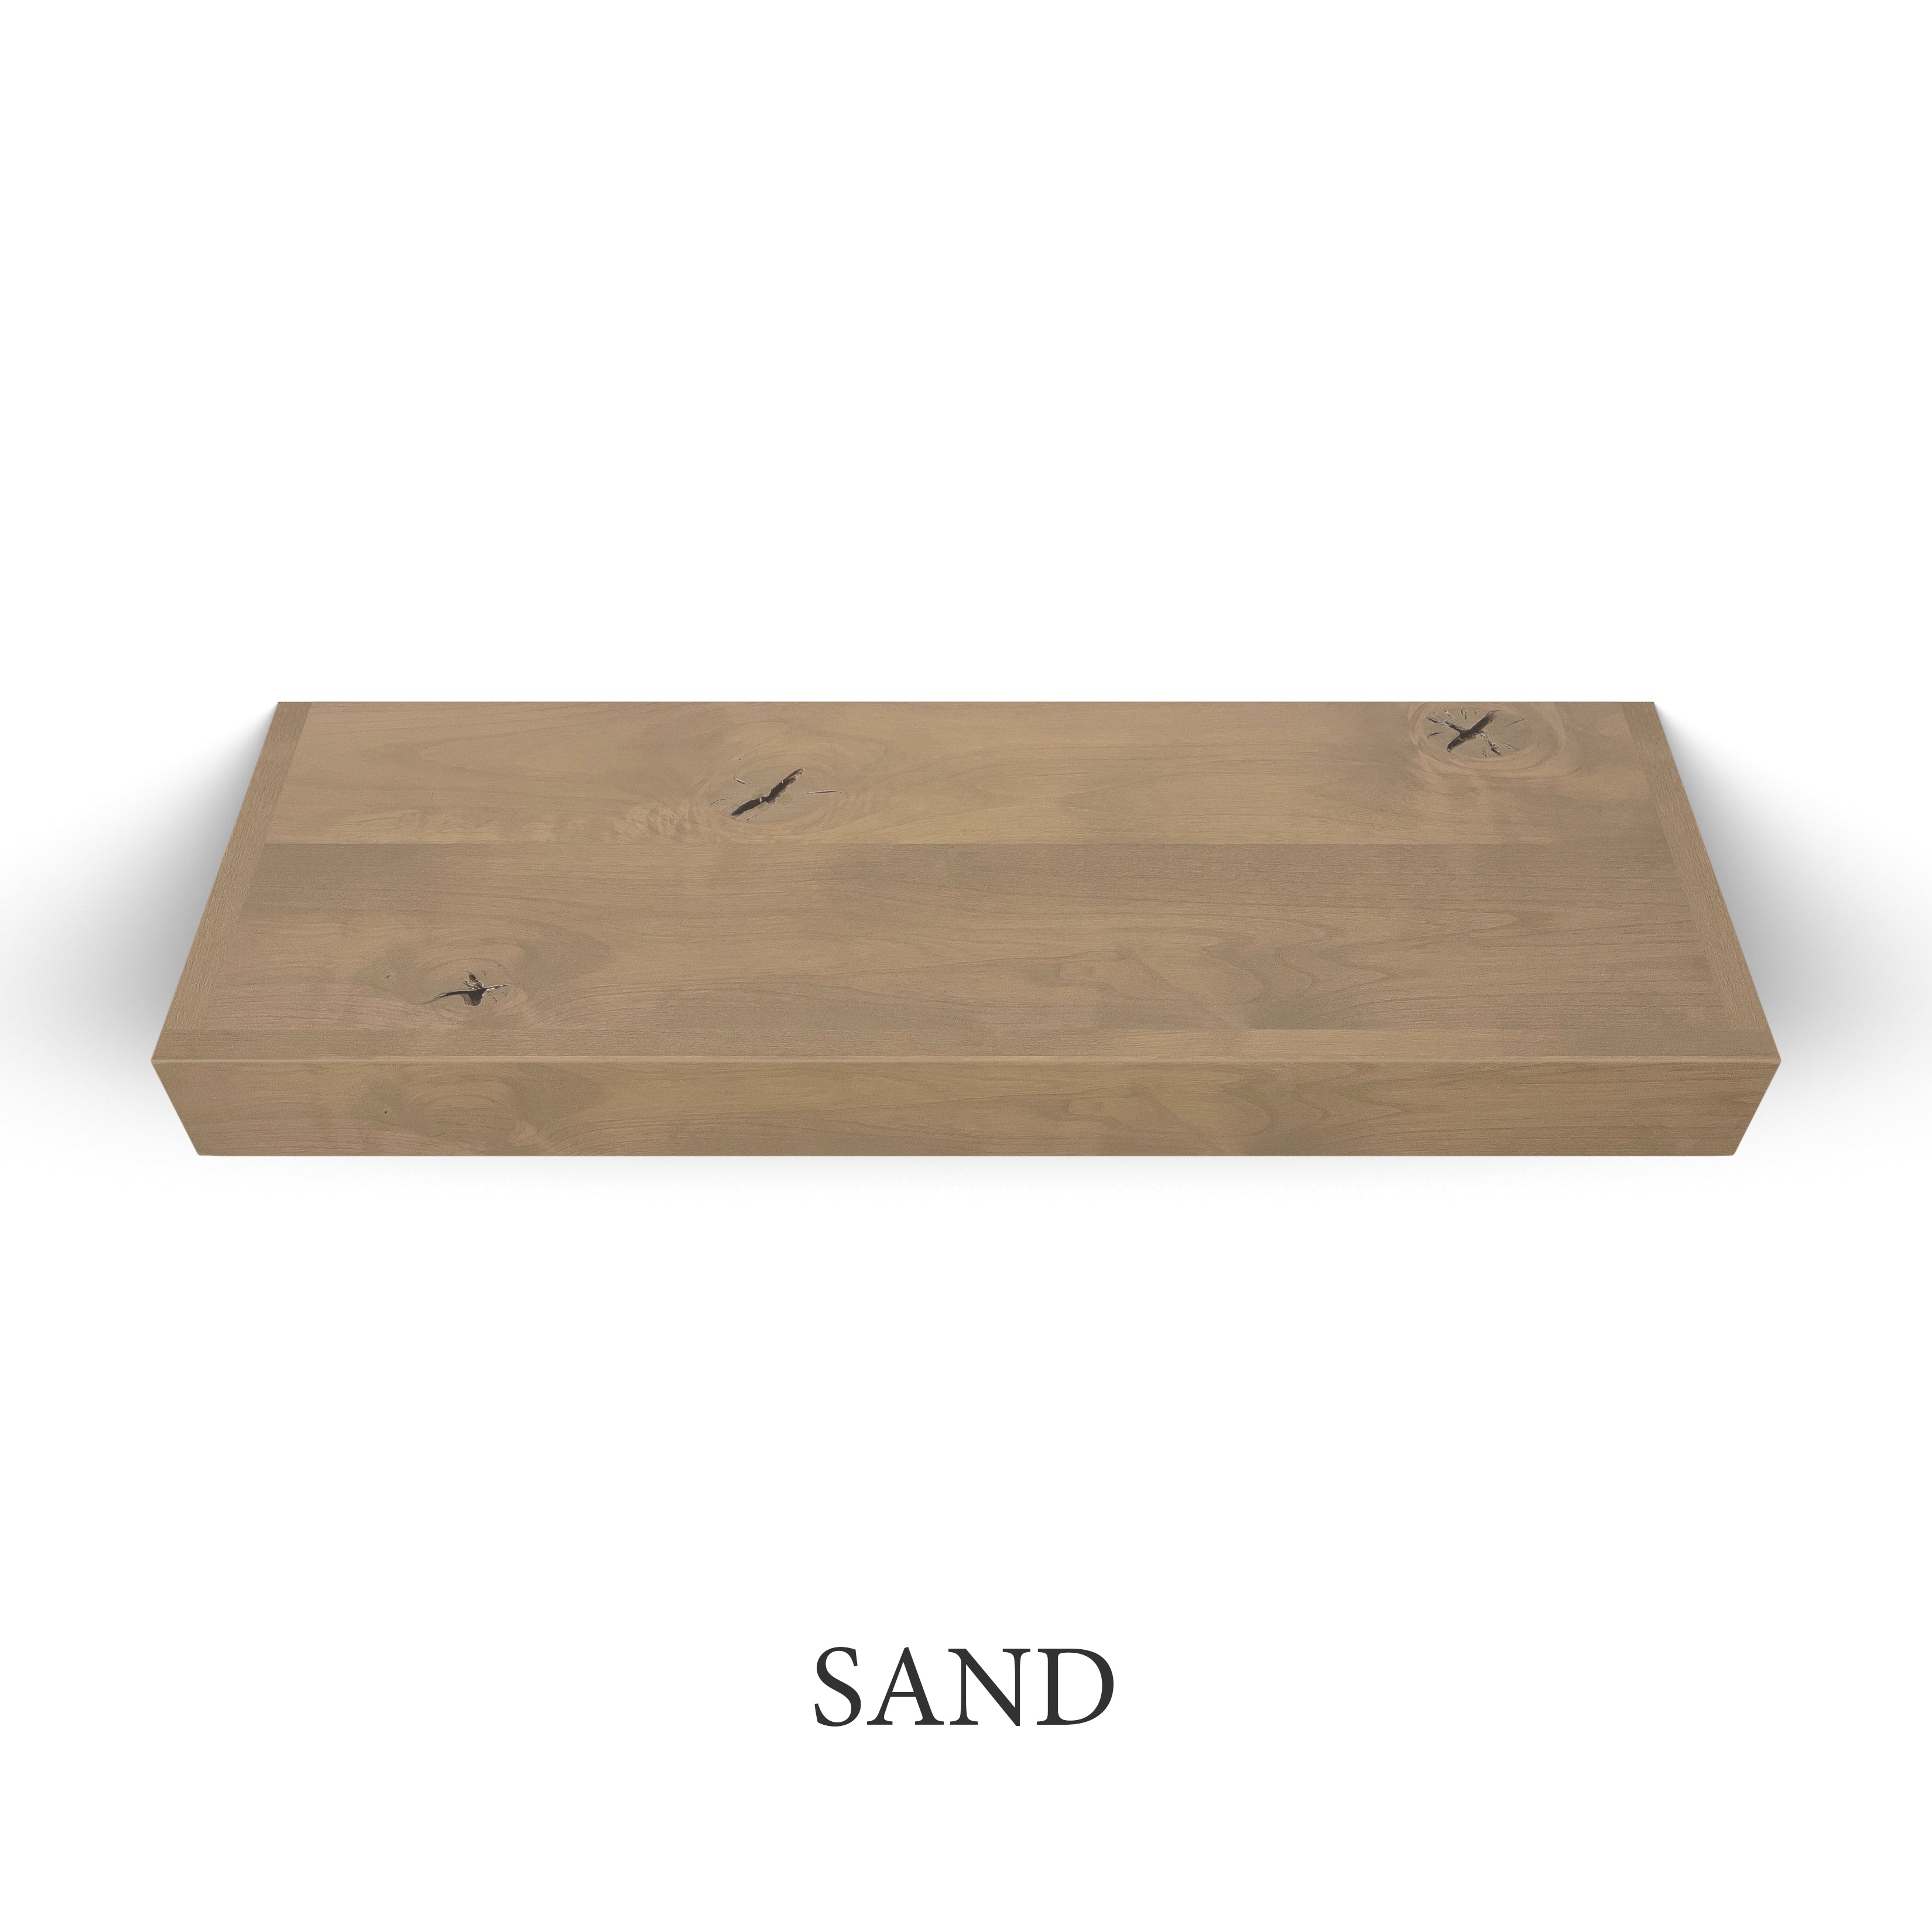 sand Rustic Alder 3 Inch Thick LED Lighted Floating Shelf - Hardwired